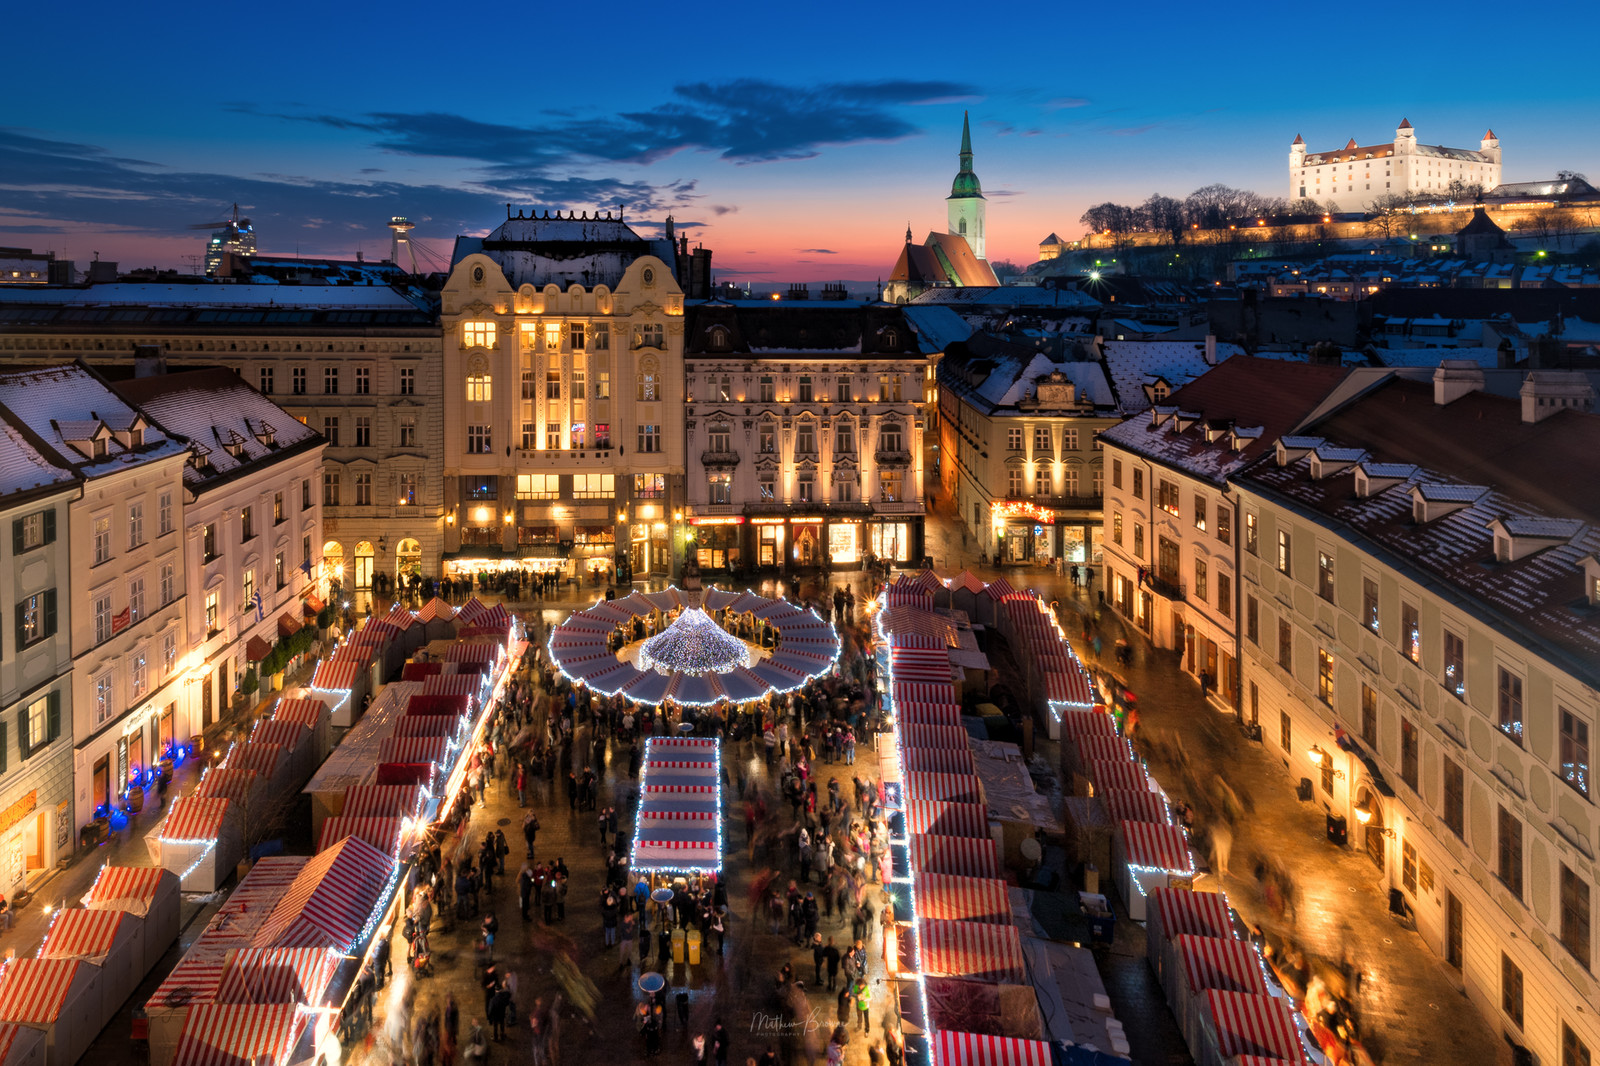 Bratislava Christmas Markets photo spot, Bratislava I